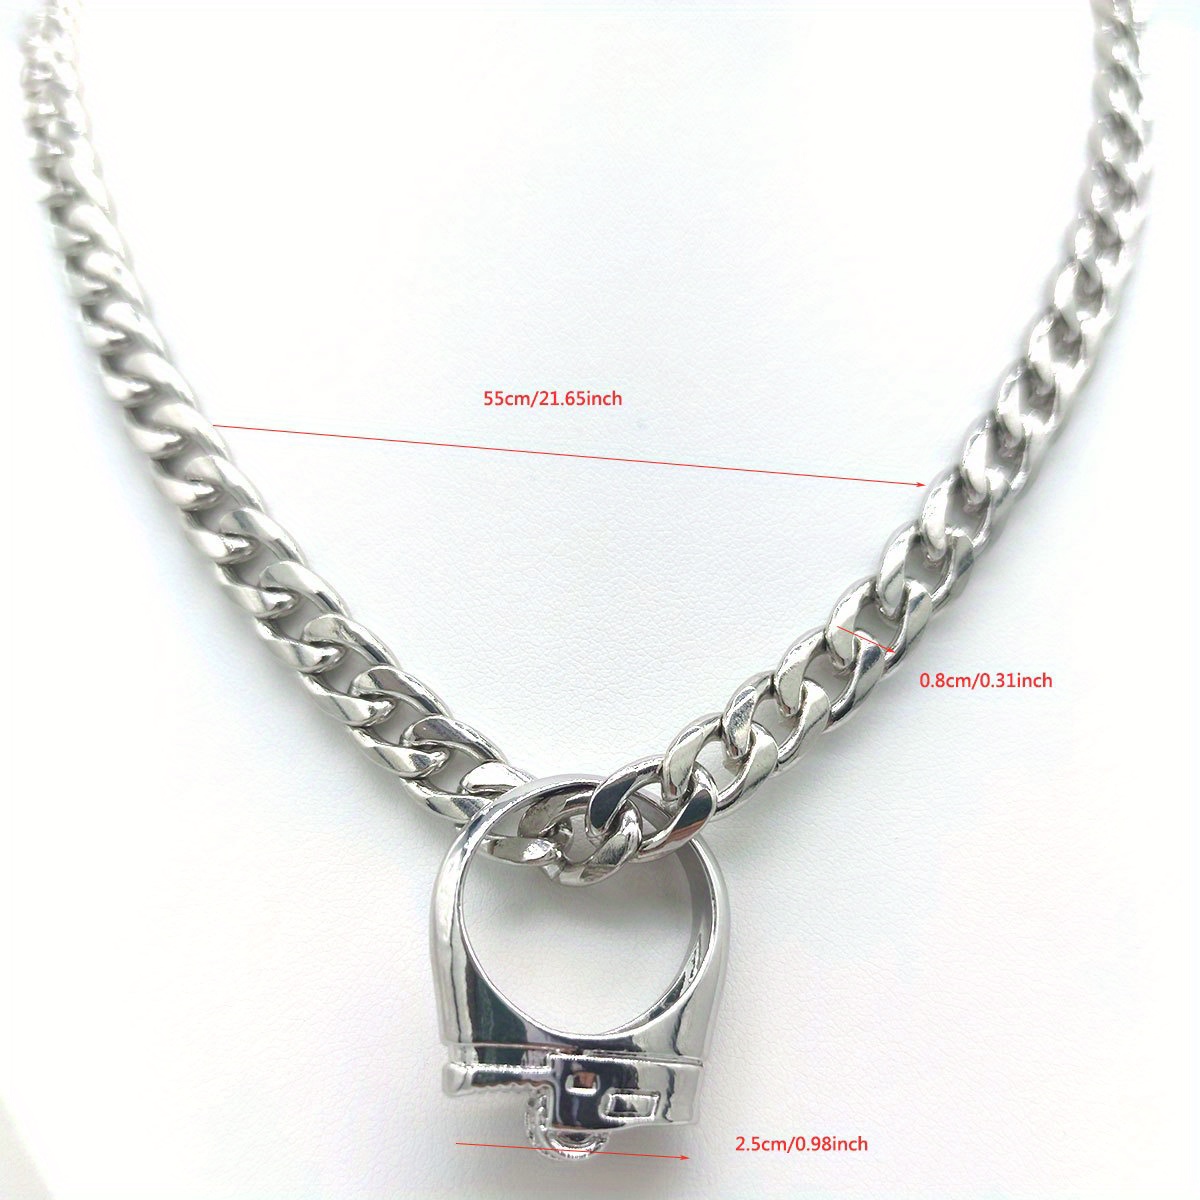 Black ring Rope Necklace for Men